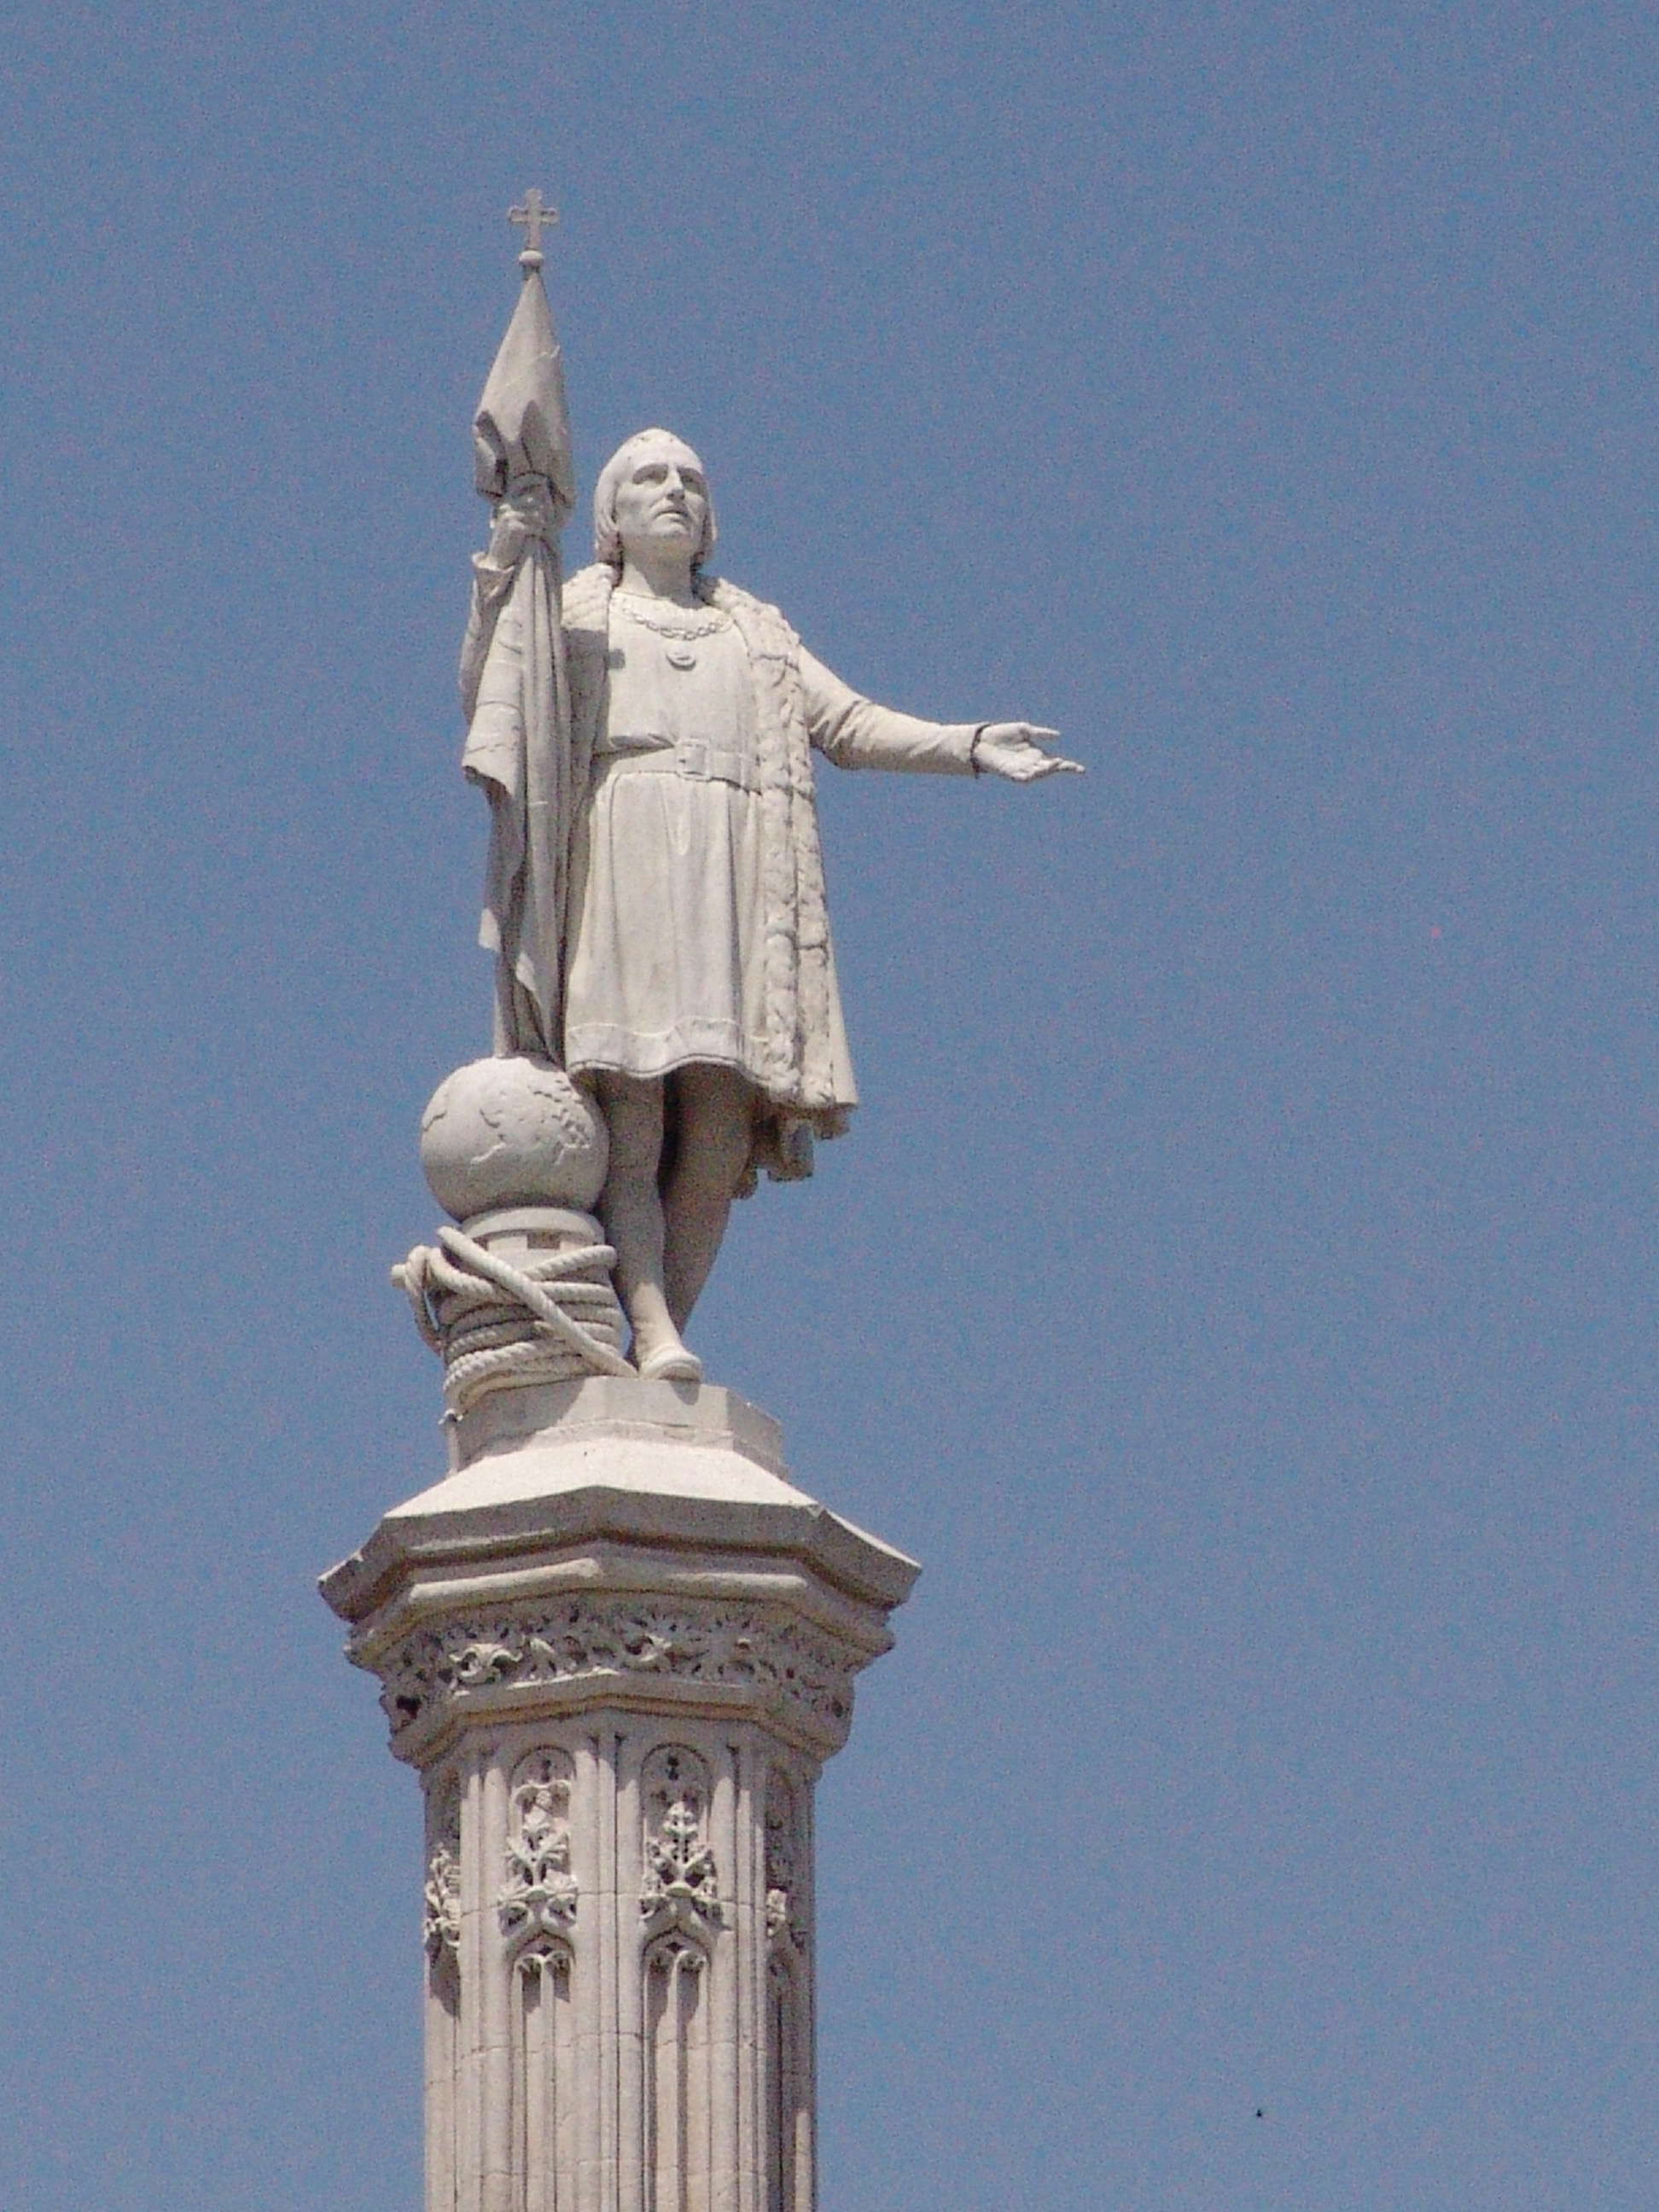 Christopher Columbus monument in Madrid, Spain